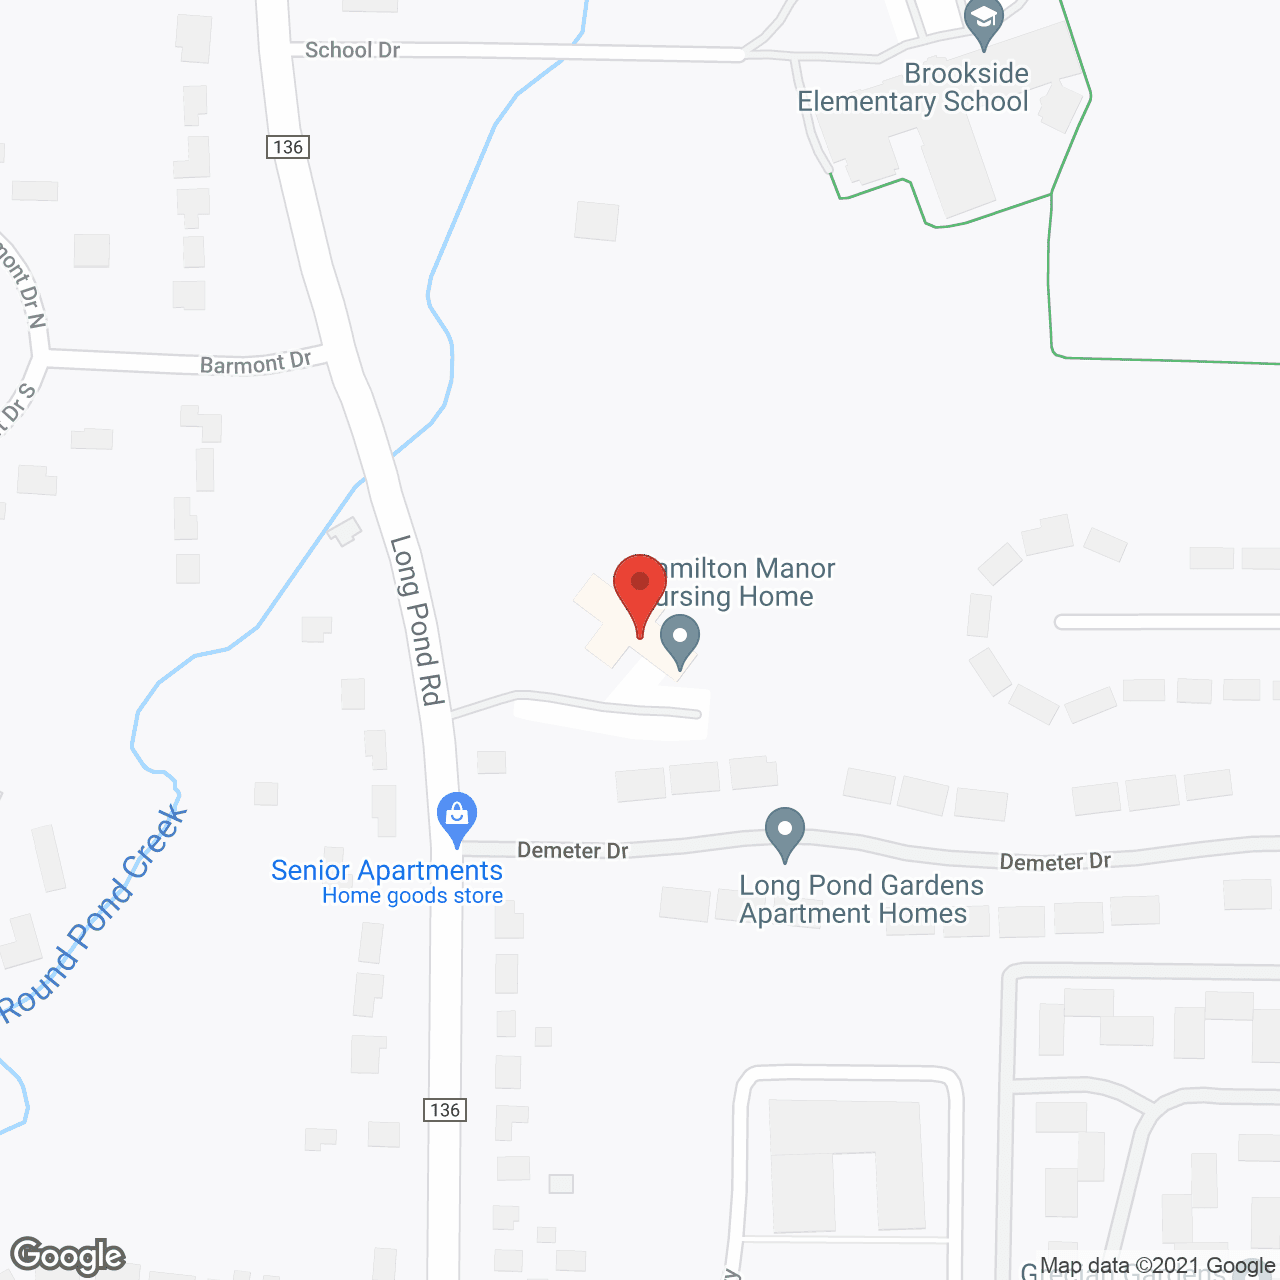 Hamilton Manor Nursing Home in google map